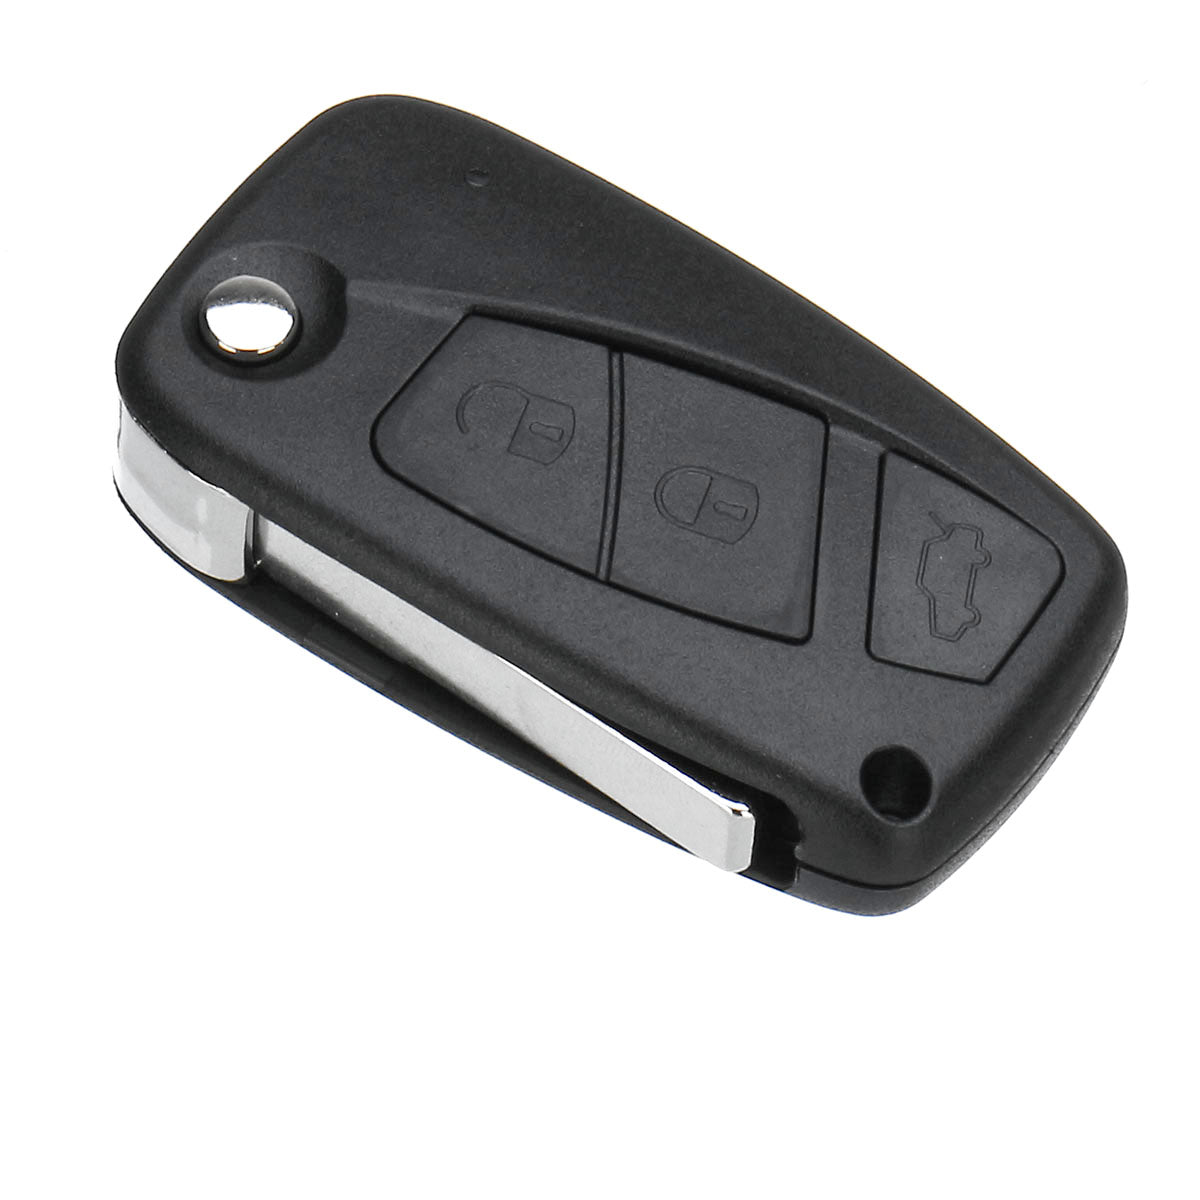 Dim Gray 3 Buttons Flip Remote Key Case Cover for Peugeot Bipper Boxer Expert Partner